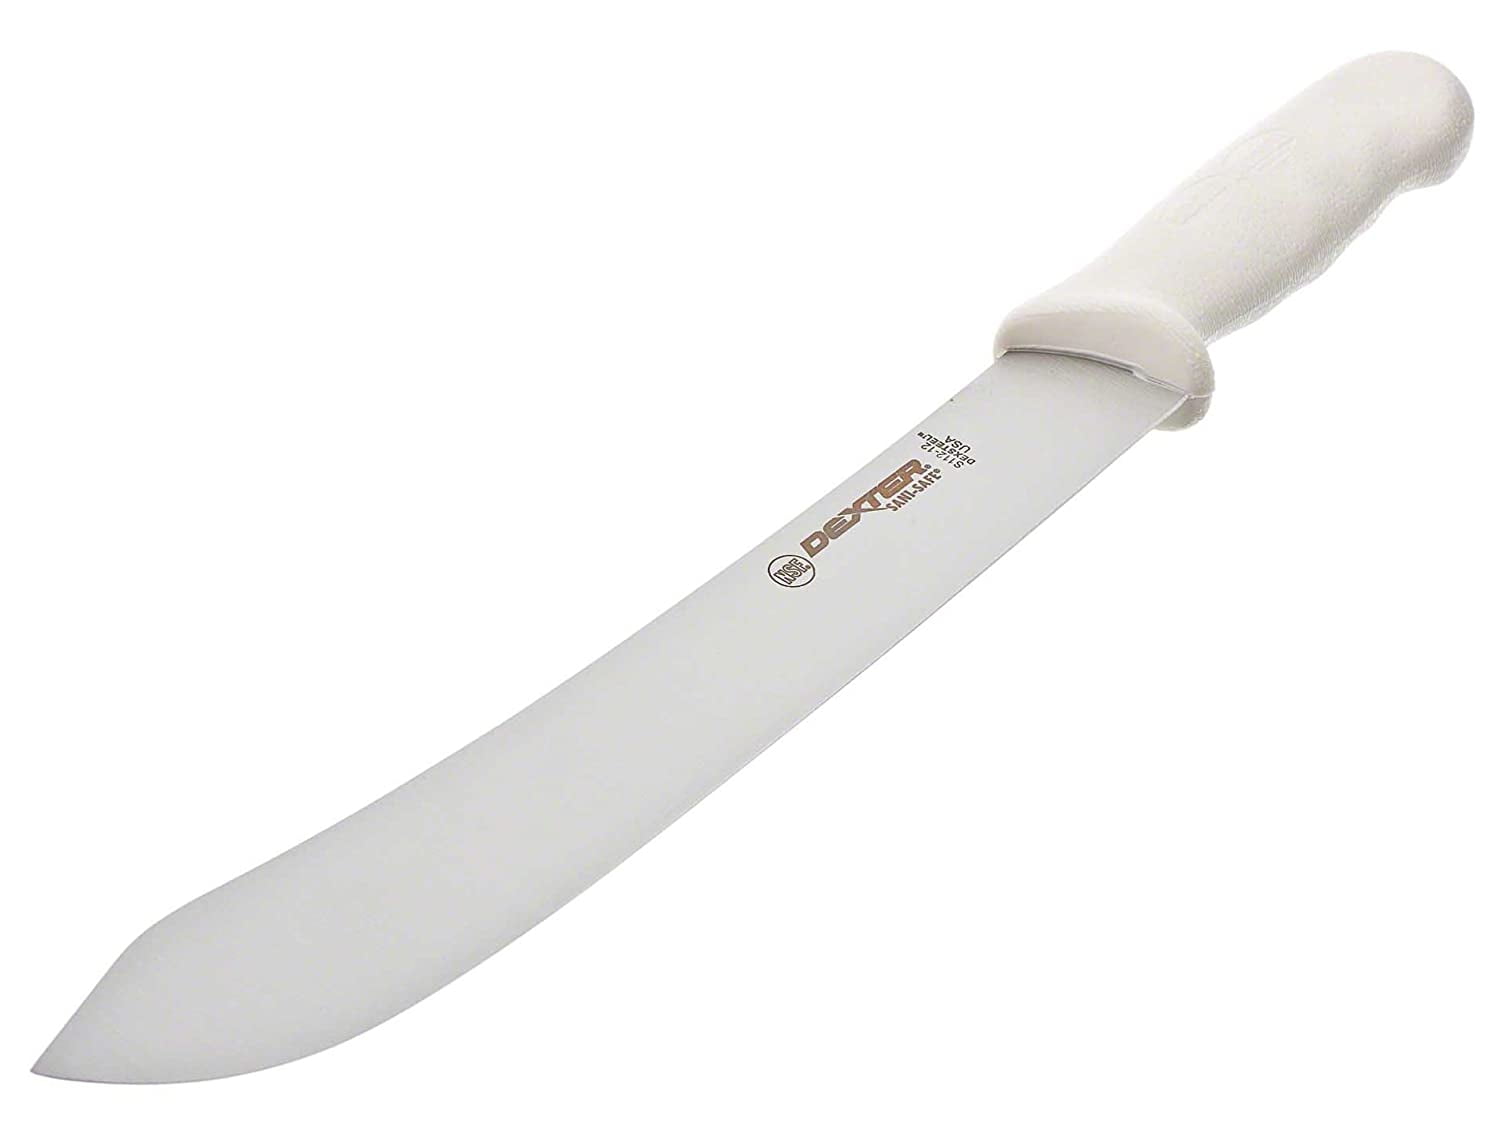 Dexter-Russell 6 Butcher Knife, S112-6PCP, SANI-SAFE Series